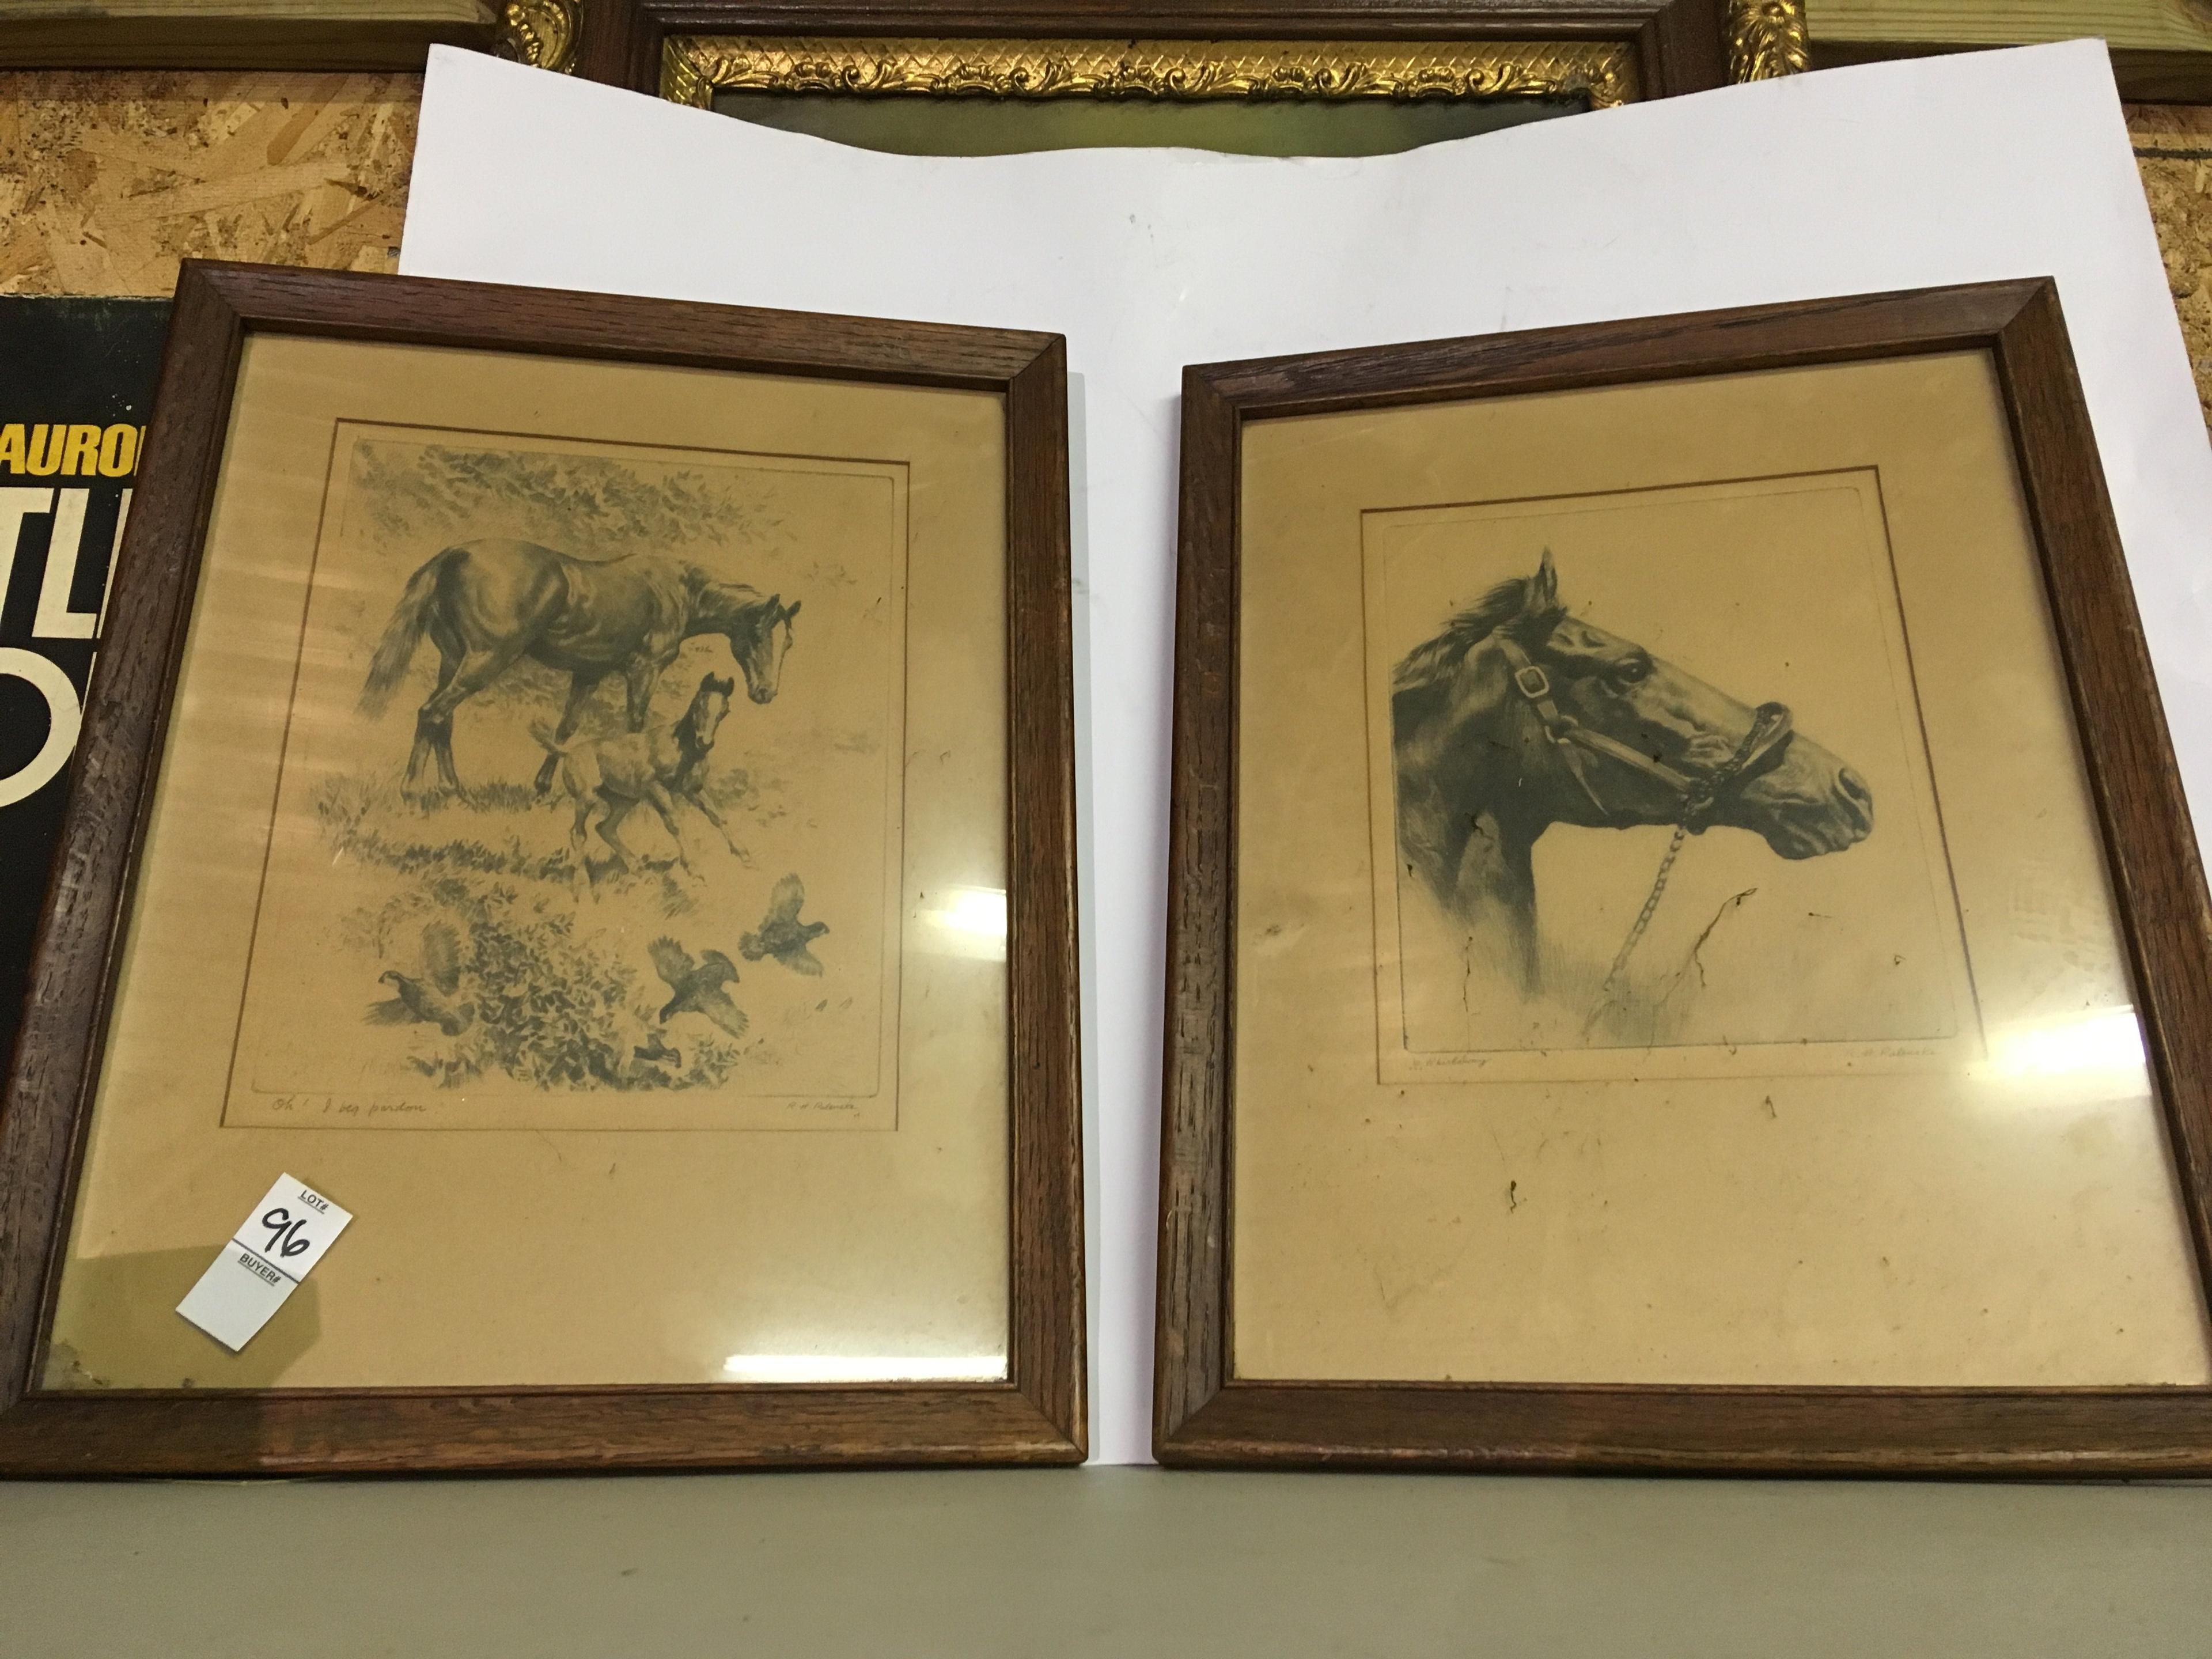 Two framed original horse prints signed by R. H. PALMAKE